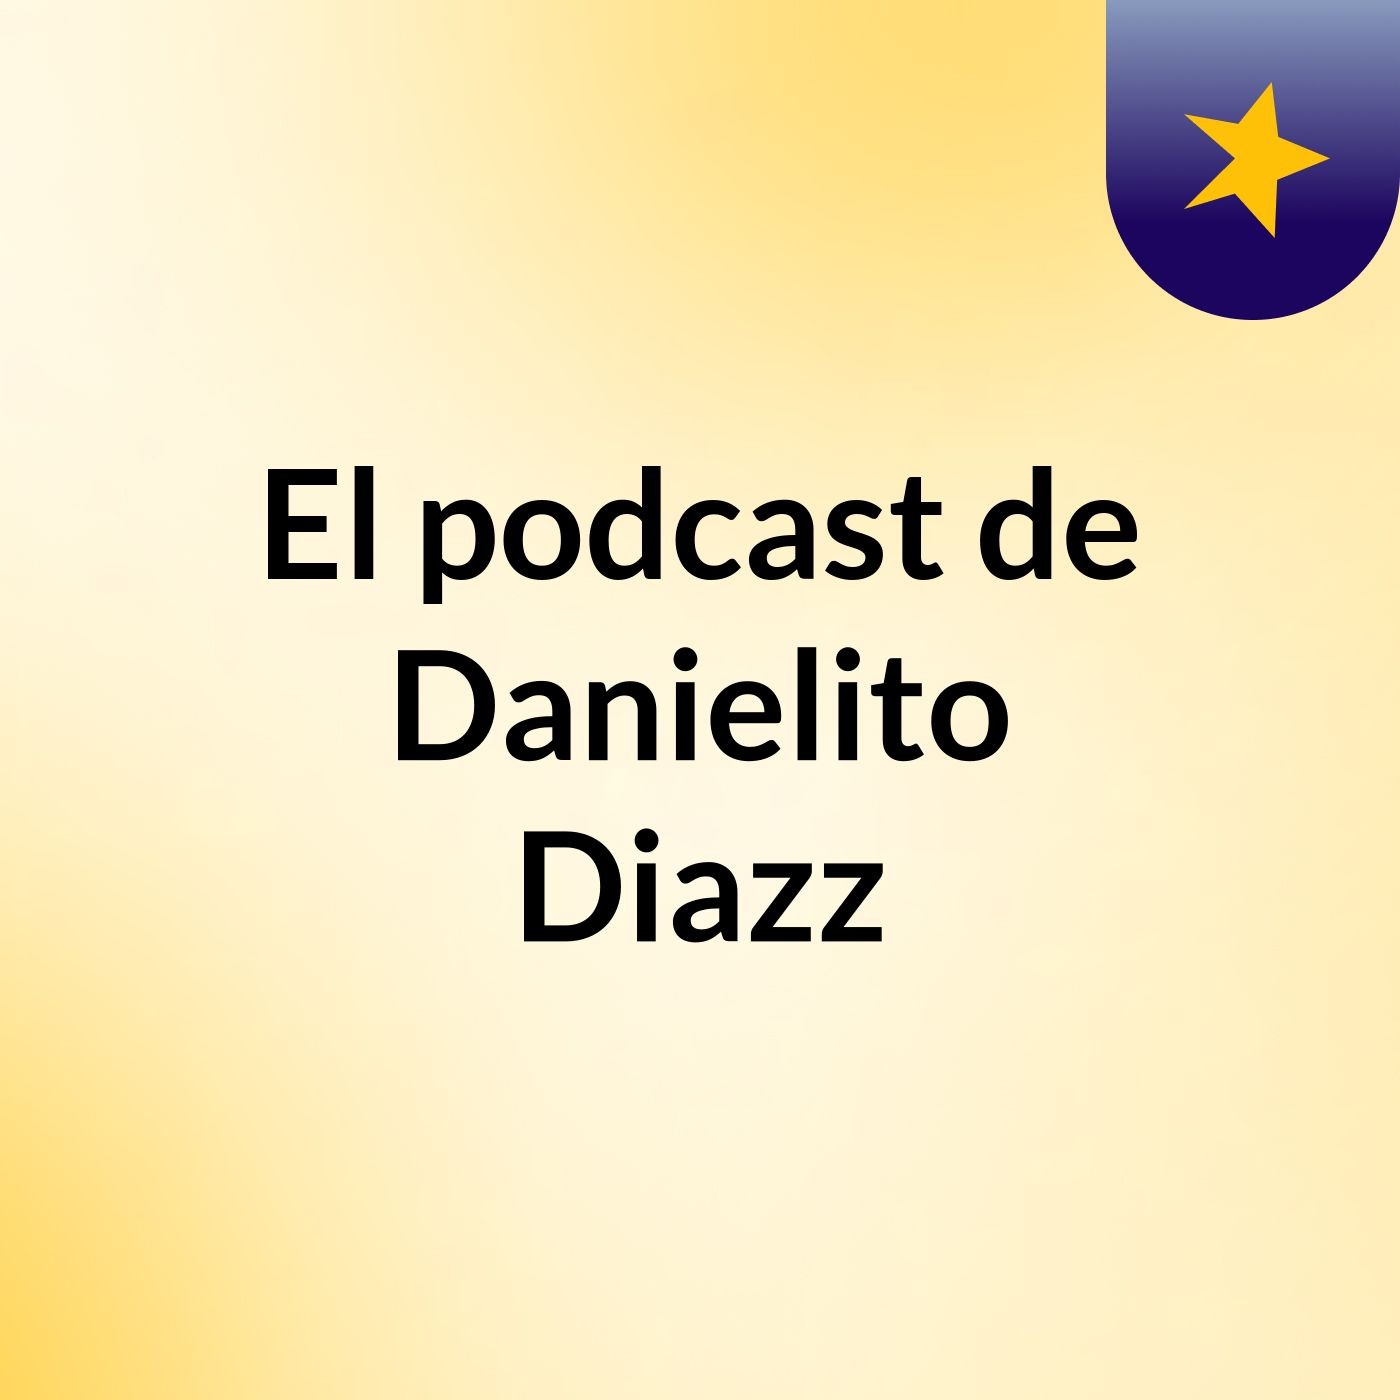 El podcast de Danielito Diazz